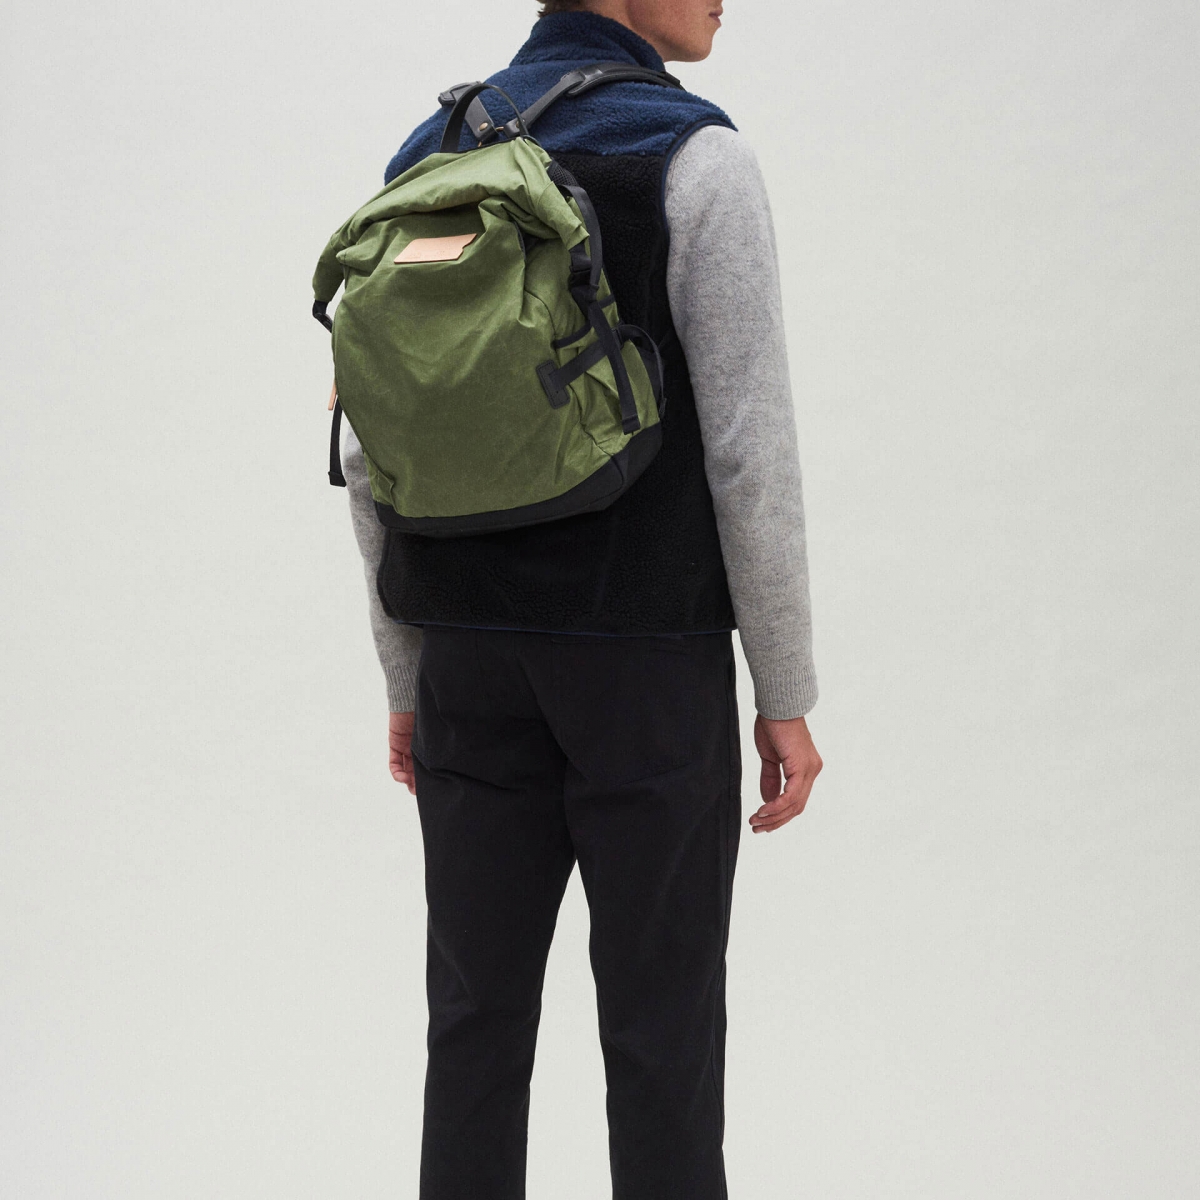 20L Basile Backpack - Bancha Green (image n°5)